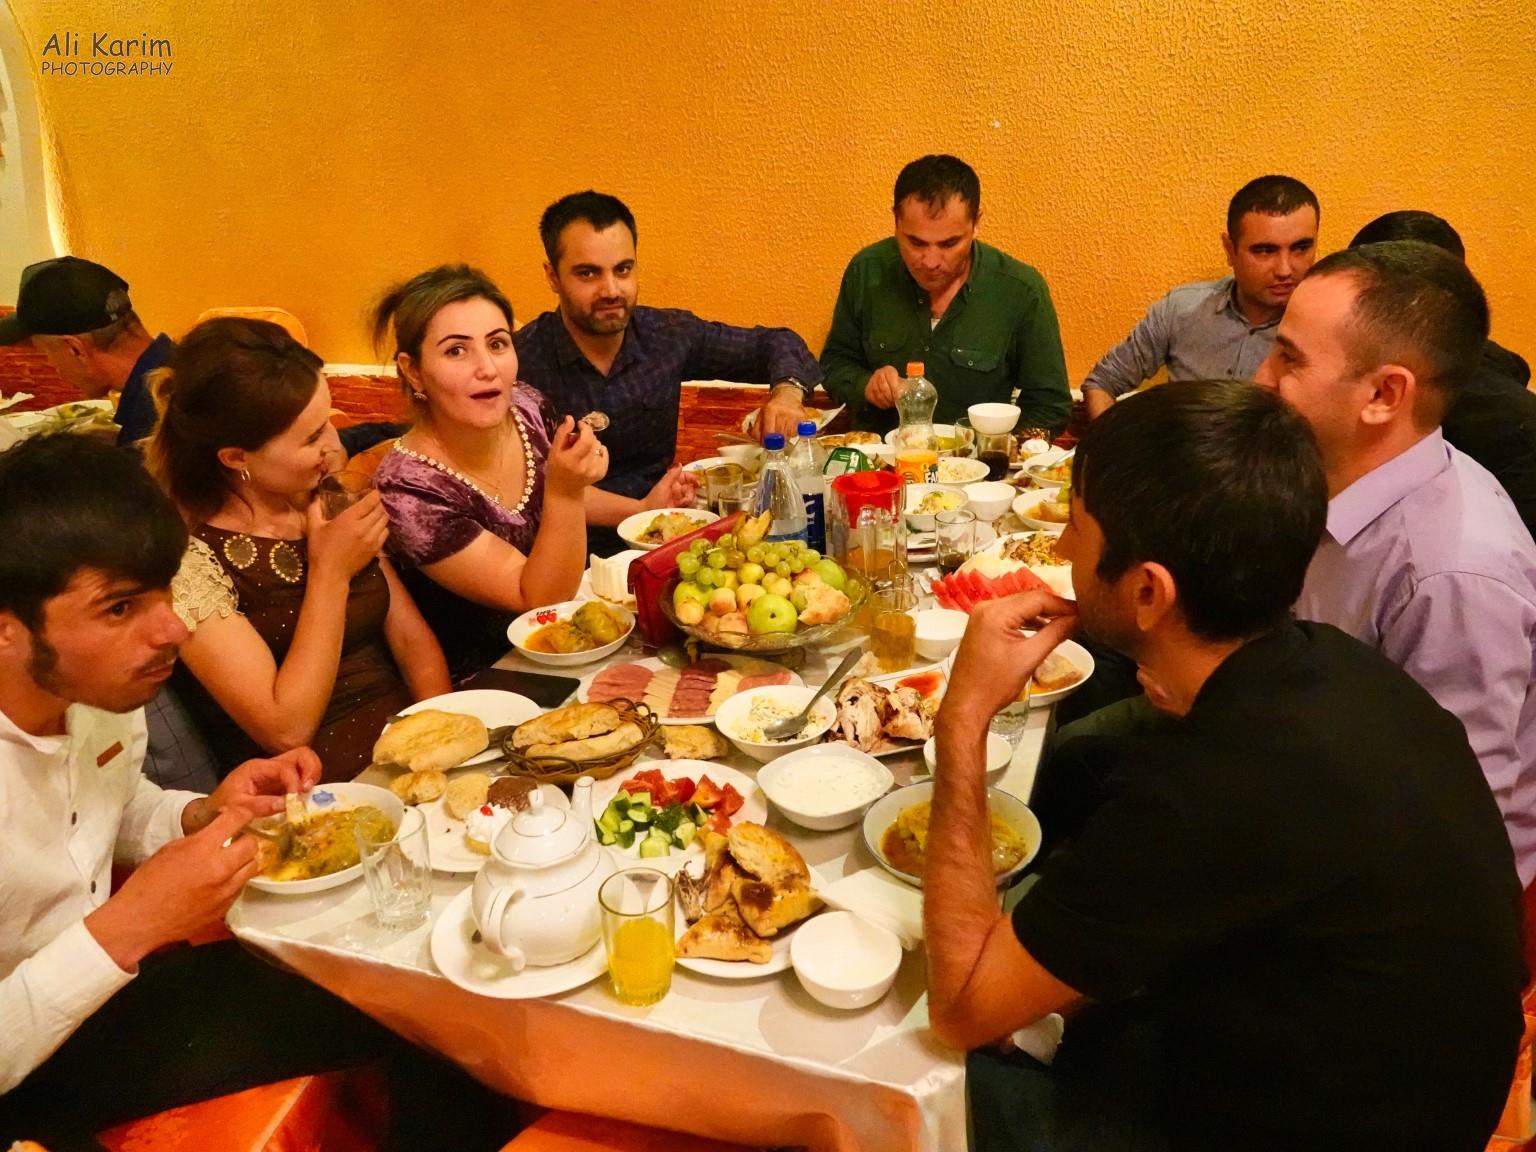 Onto Khorog, Tajikistan, More eating and merrymaking